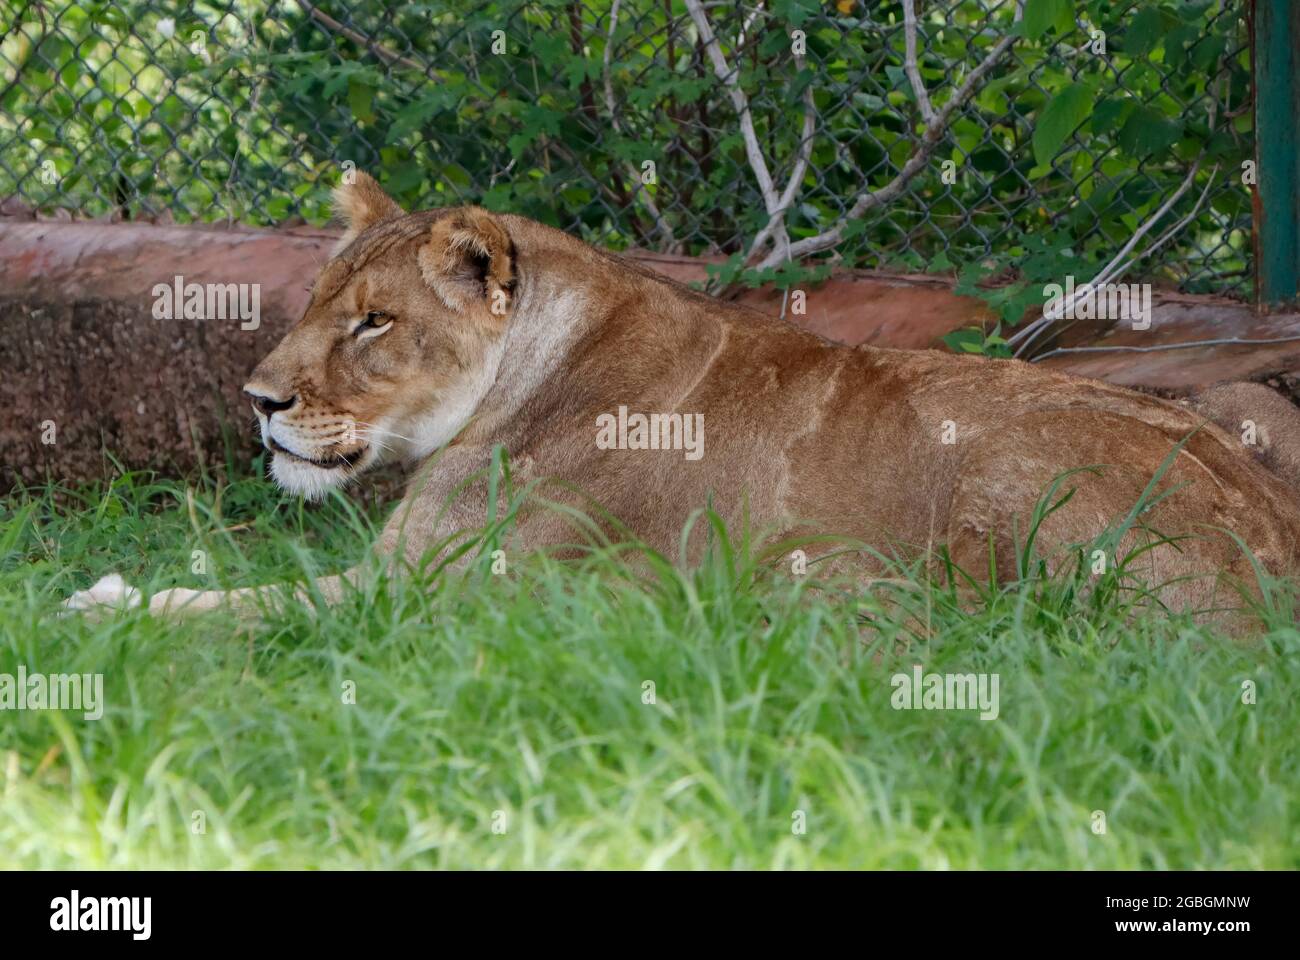 leonessa seduta su erba verde. Foto Stock